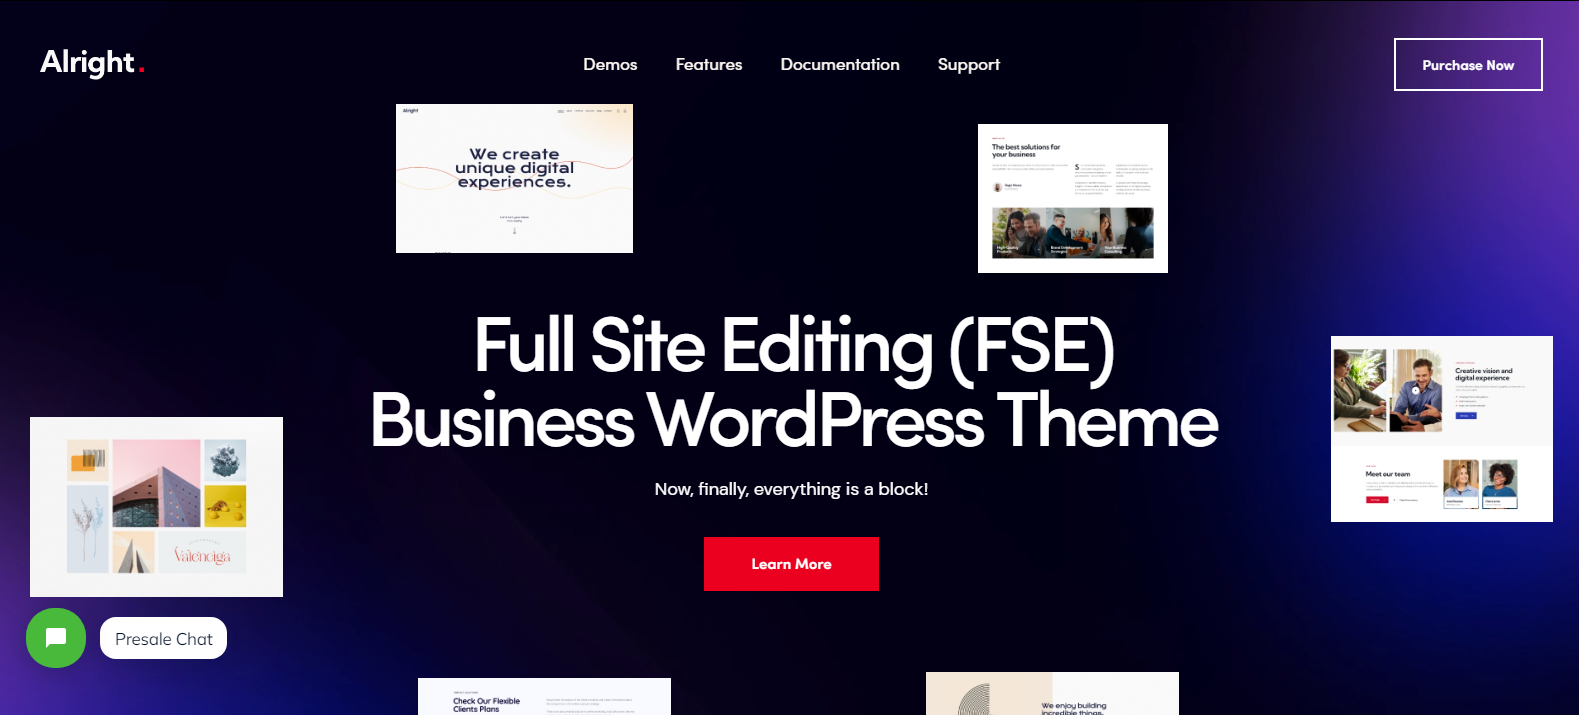 Alright v1.0 - Full Site Editing Business WordPress Theme